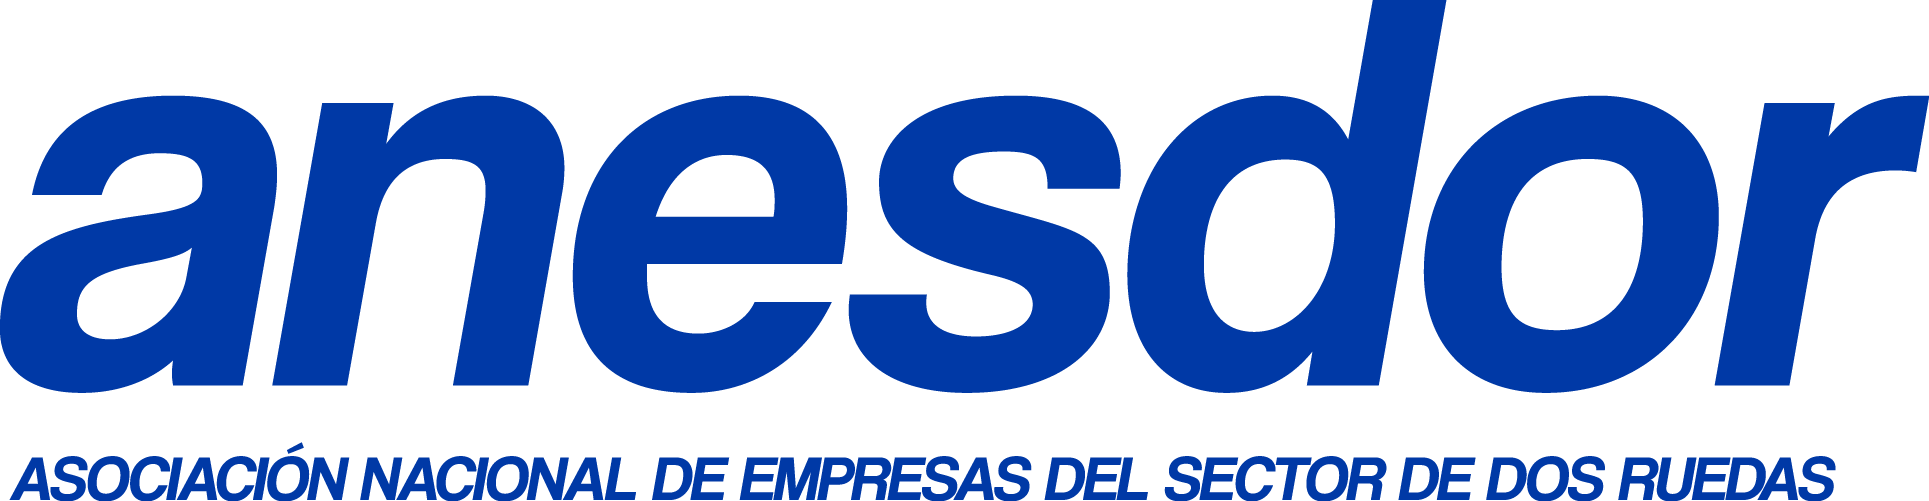 Logo Anesdor